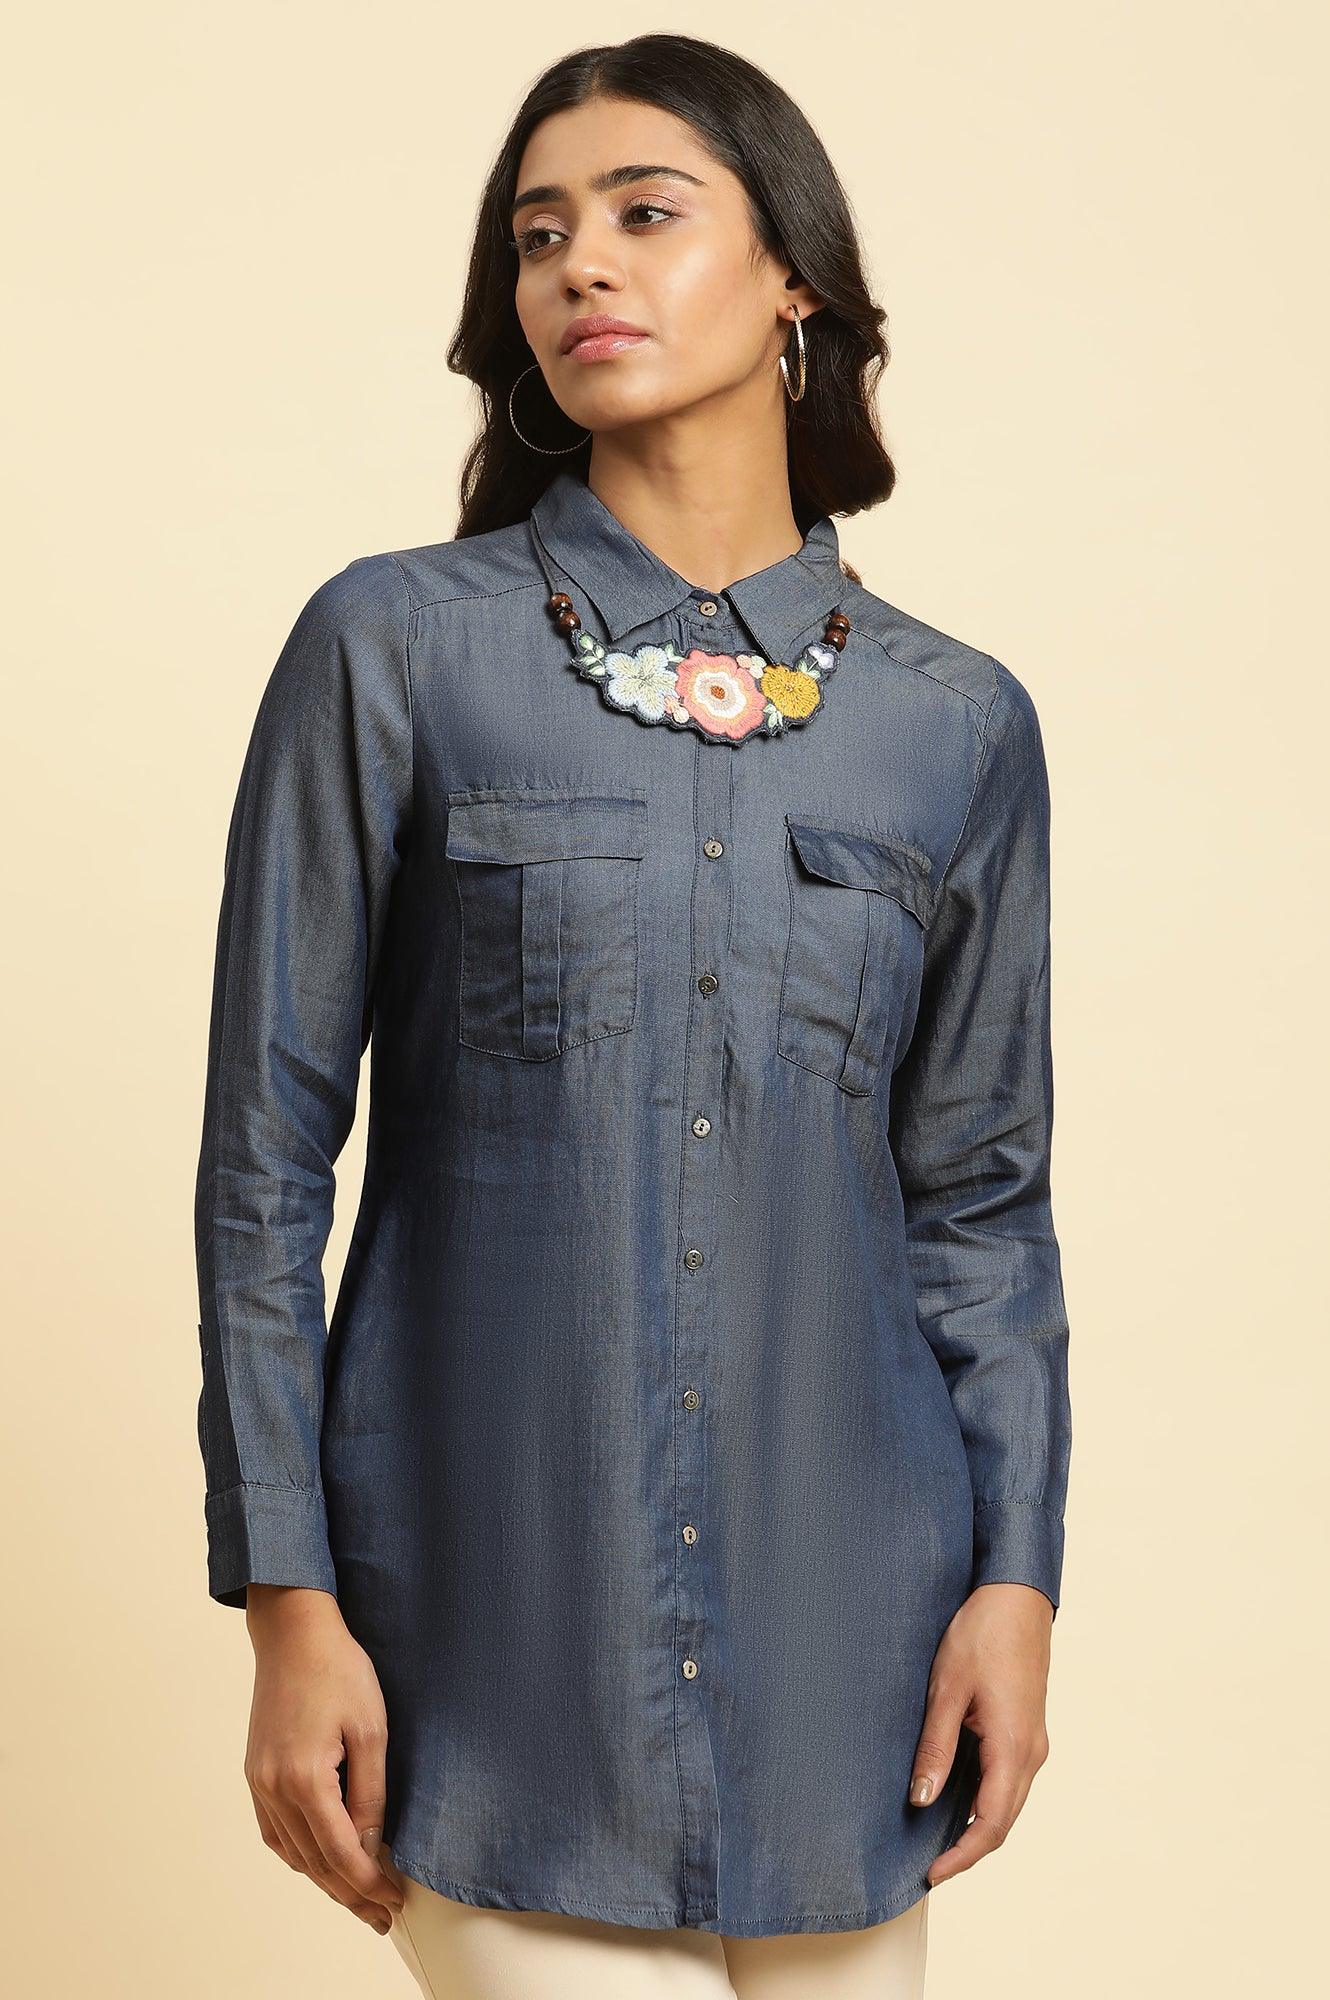 Blue Denim Western Shirt With Embroidered Neck Piece - wforwoman